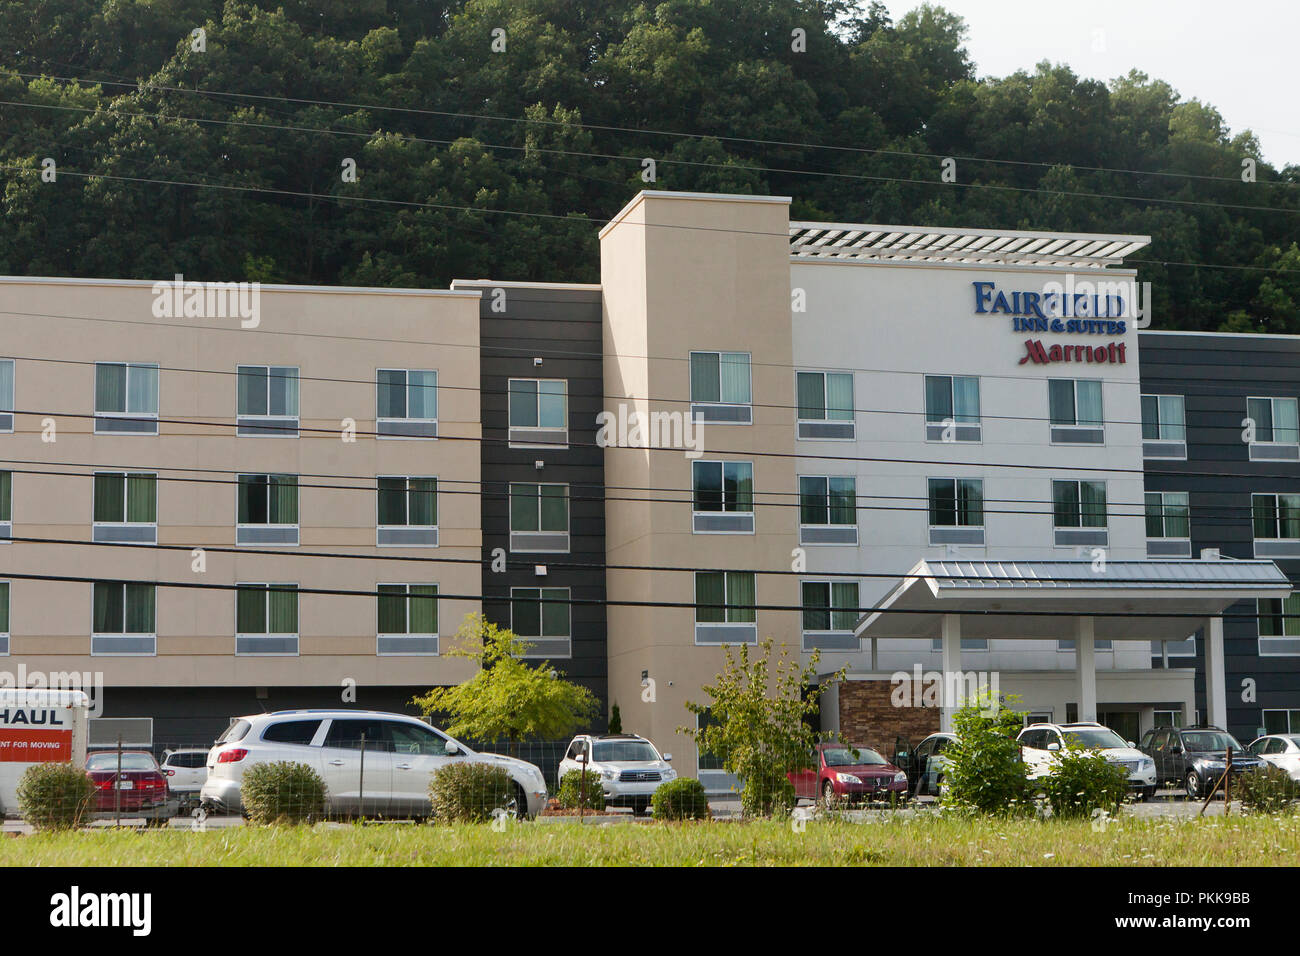 Fairfield Inn and Suites Marriott building exterior - USA Stock Photo